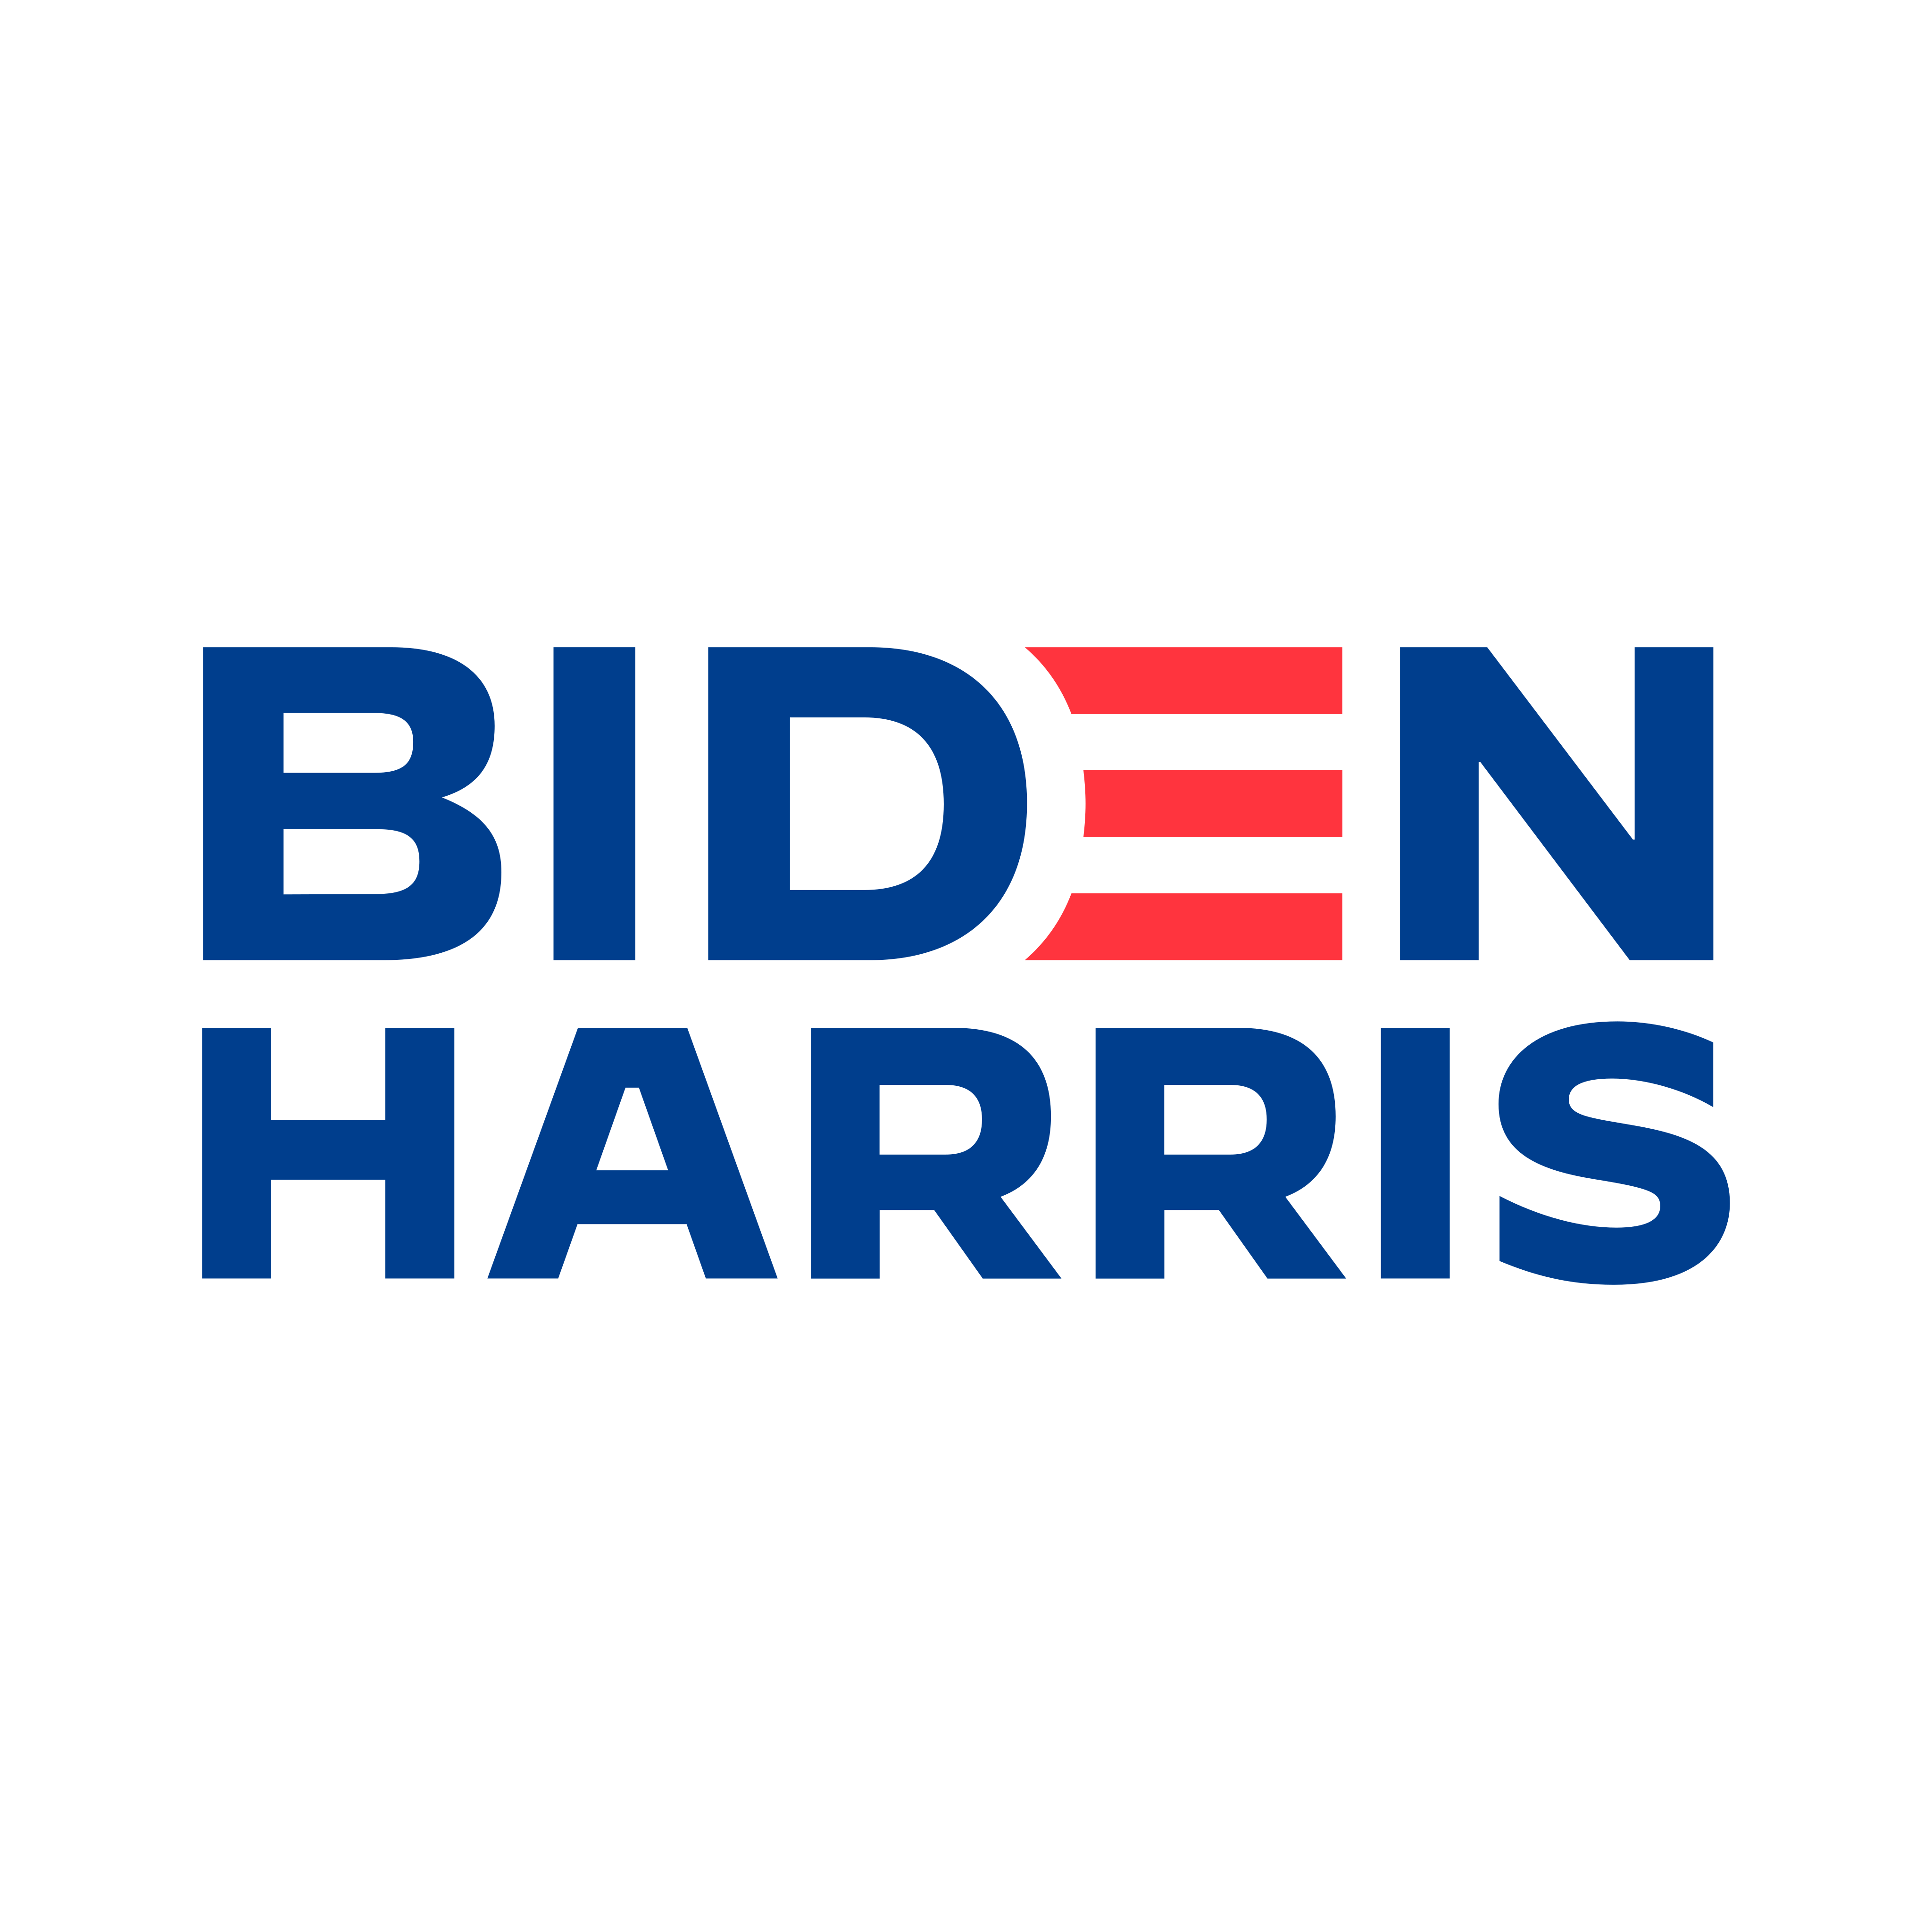 joe biden harris 2020 logo 0 - Joe Biden 2020 President Logo